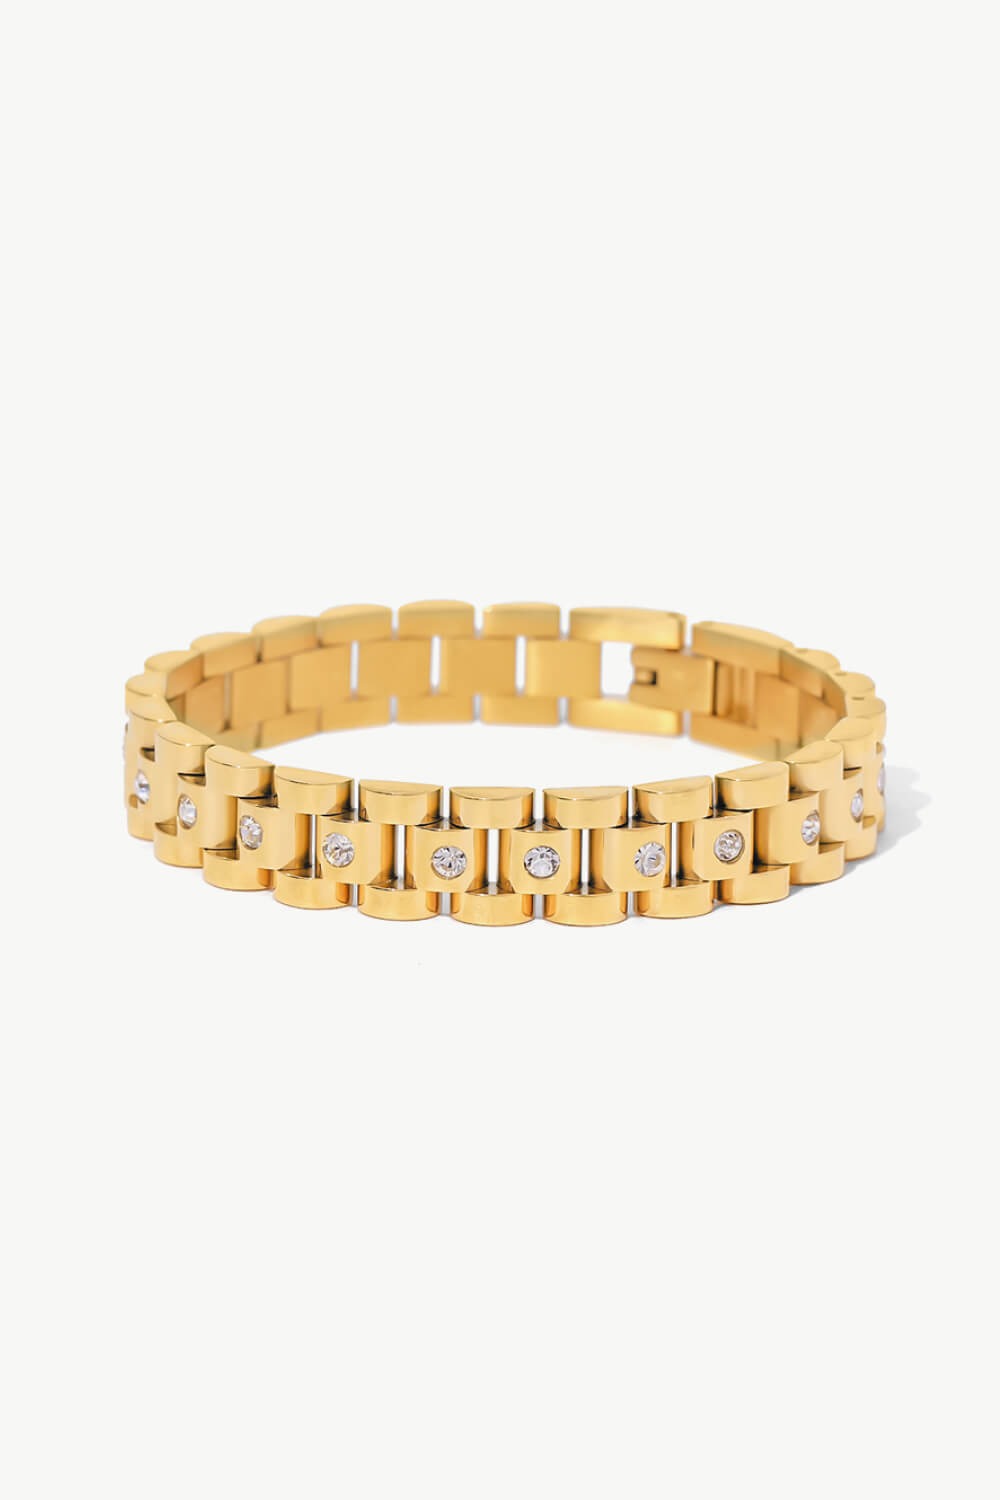 18K Gold-Plated Watch Band Bracelet - Gold / One Size - Women’s Jewelry - Bracelets - 1 - 2024